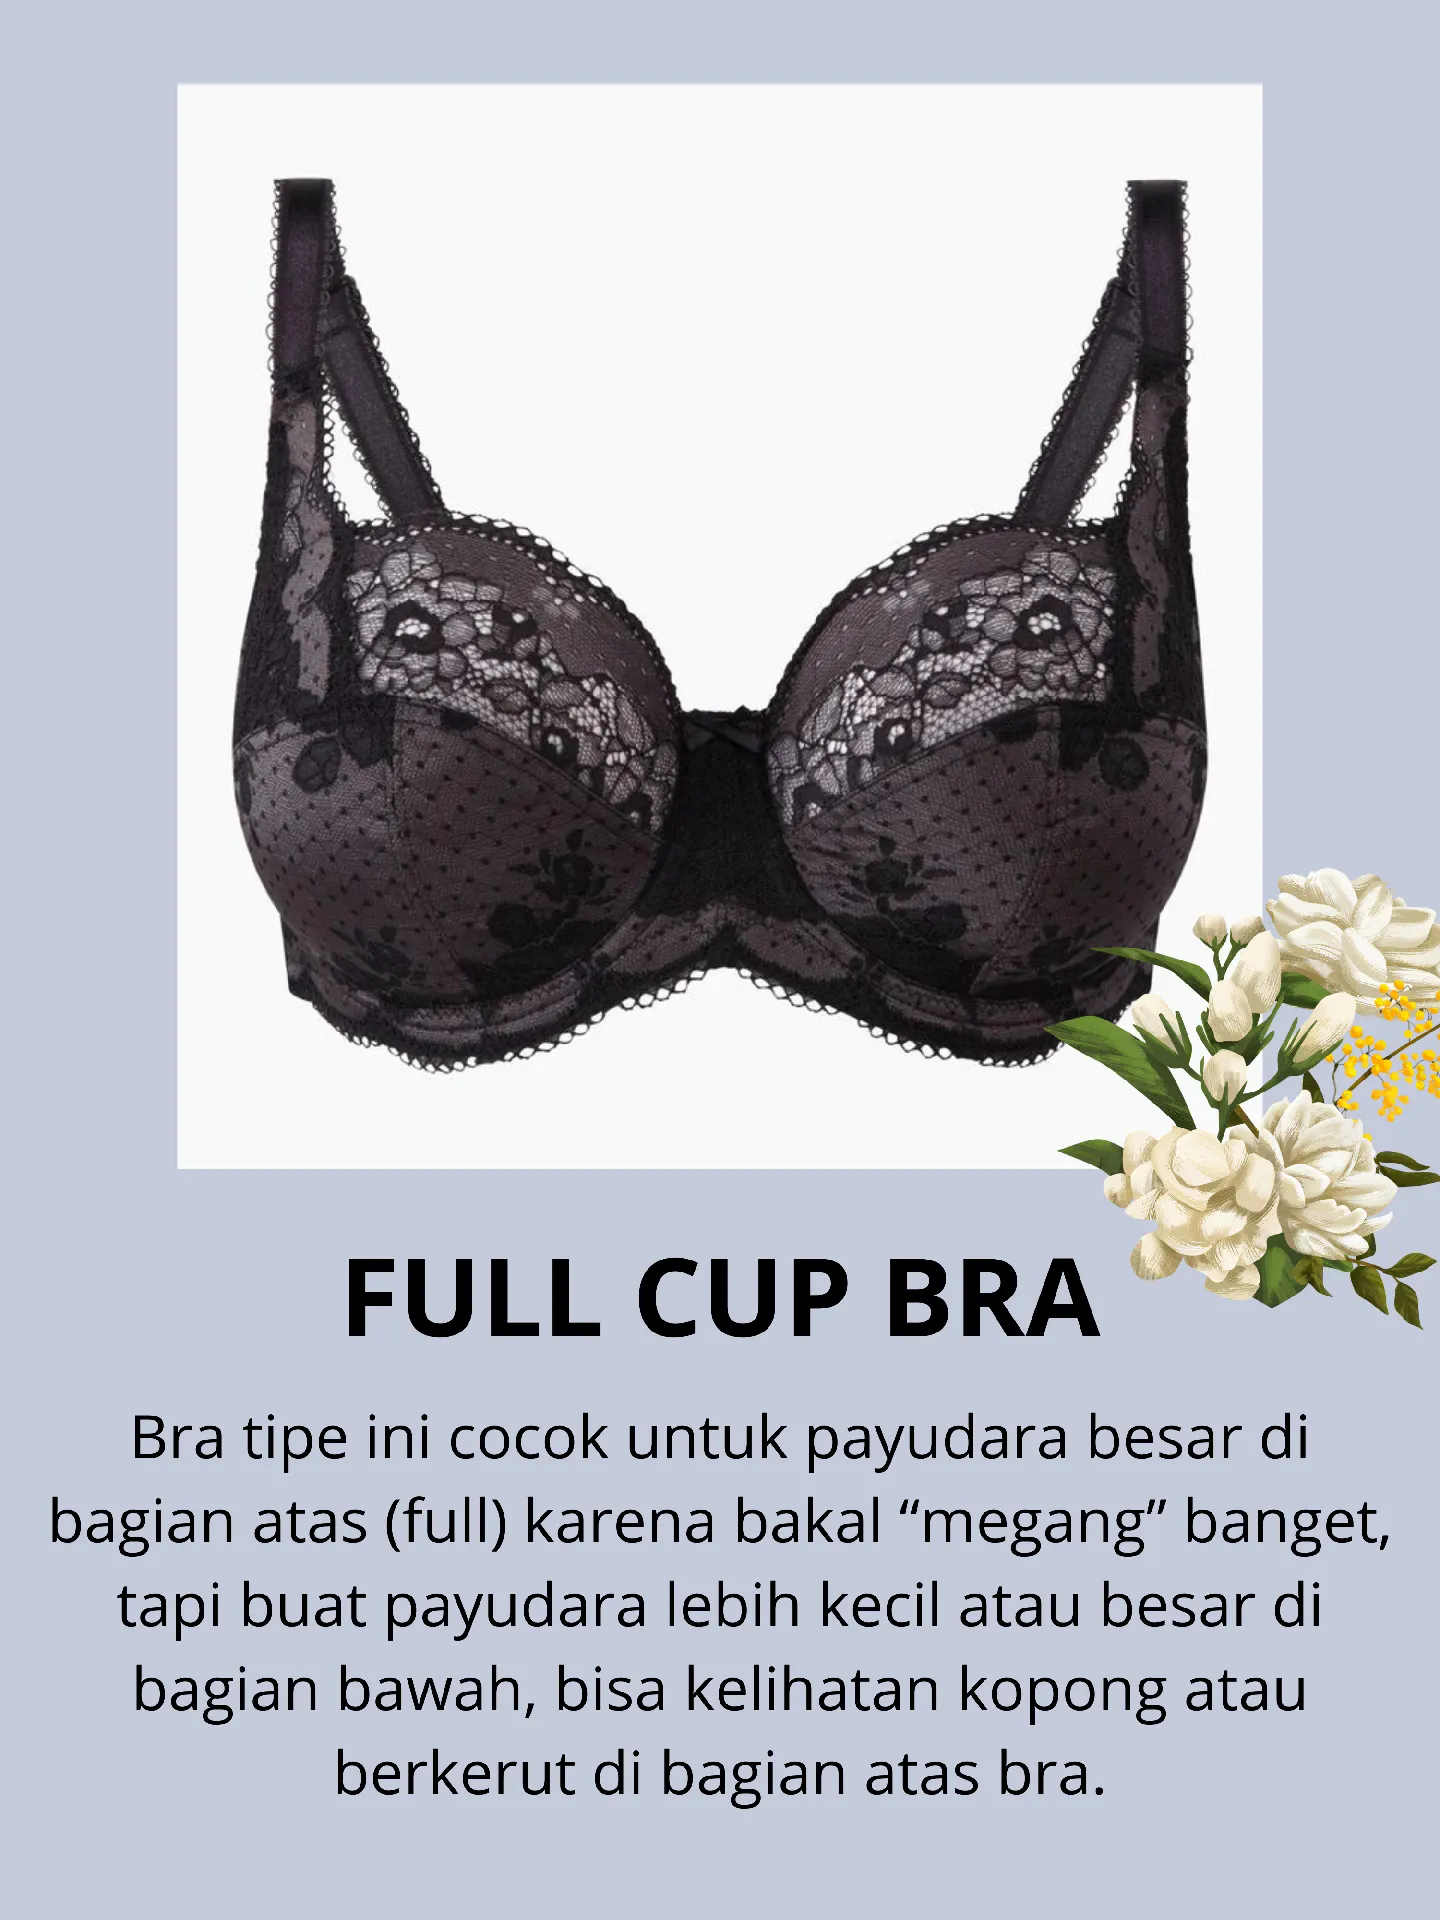 Wacoal Indonesia - 6 bra models you must have, Ladies.⁣ ⁣ Setiap bra  mempunyai fungsinya masing-masing. Tapi, baiknya semua model bra ini wajib  ada di dalam lemari kamu:⁣⁣⁣ 1. T-Shirt Bra: model